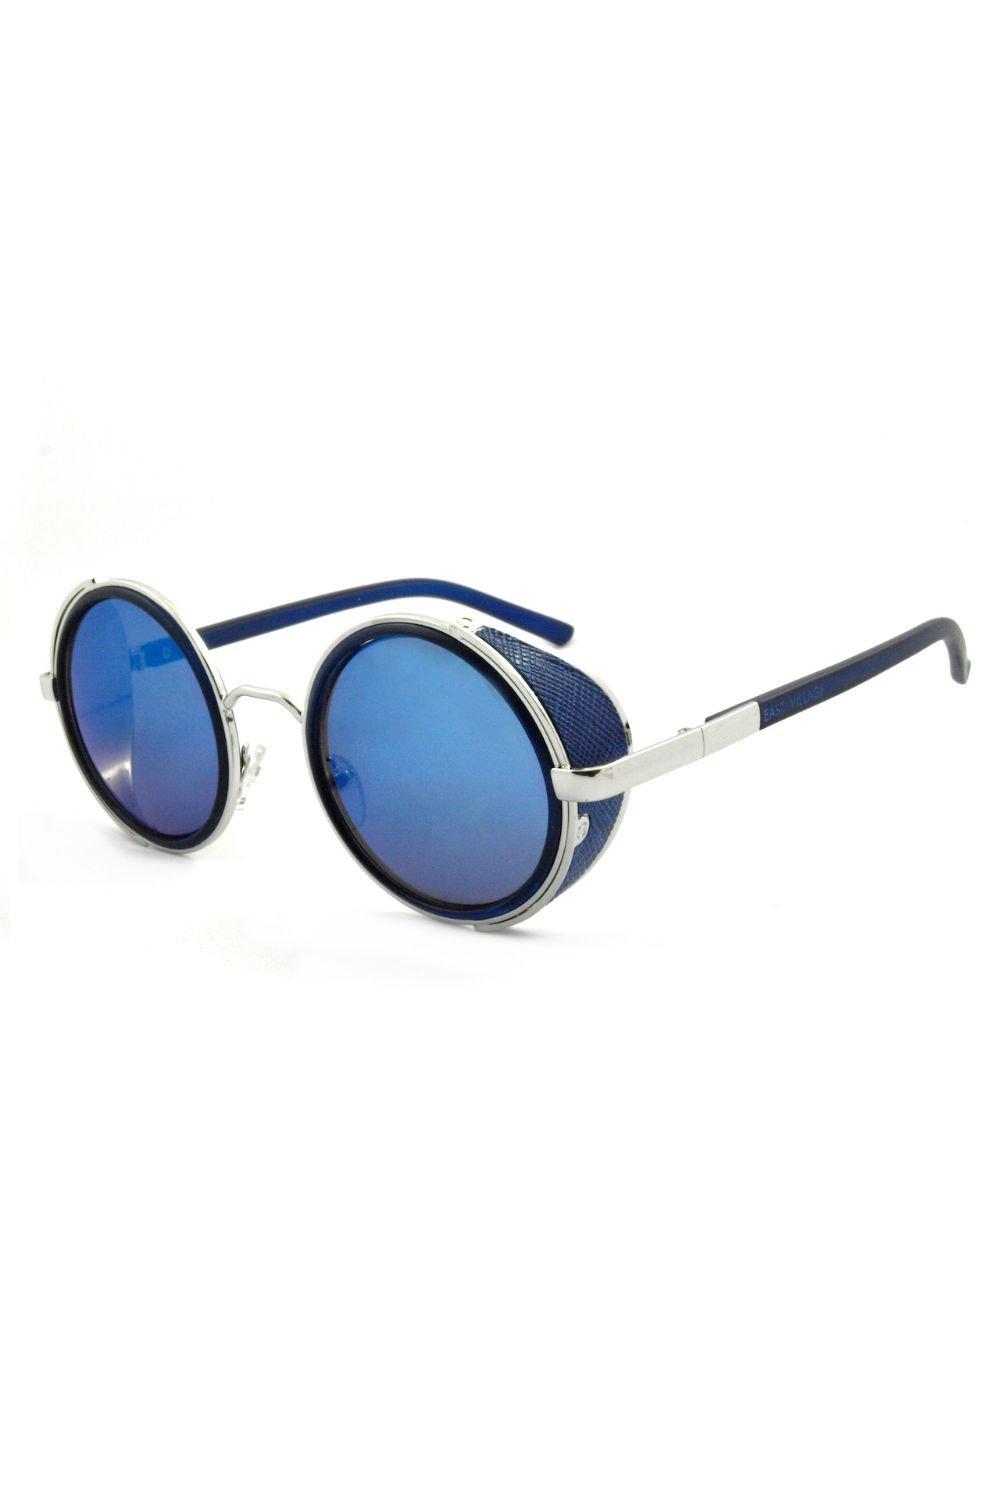 sharq village Круглые солнцезащитные очки Freeman East Village, синий